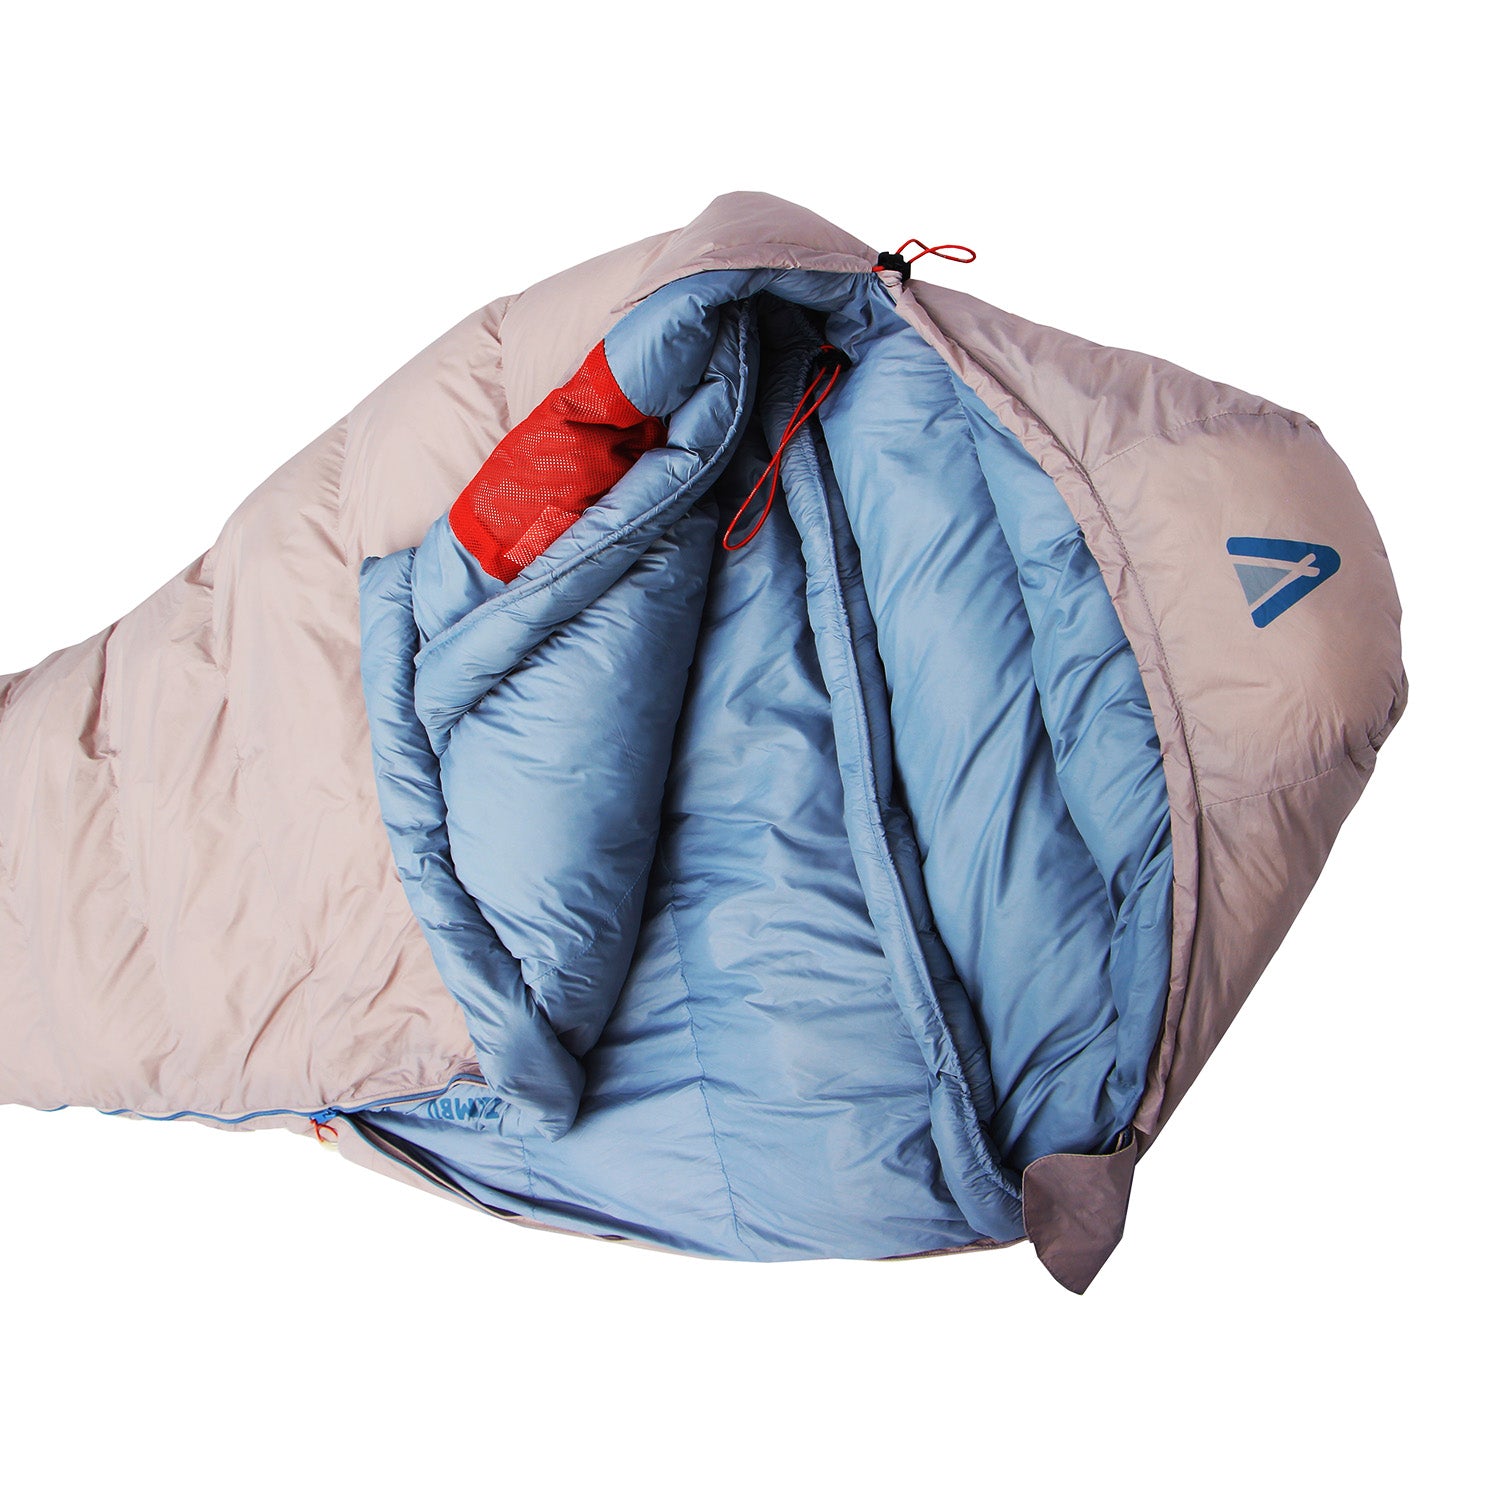 NARAM | mummy sleeping bag 1525 gr